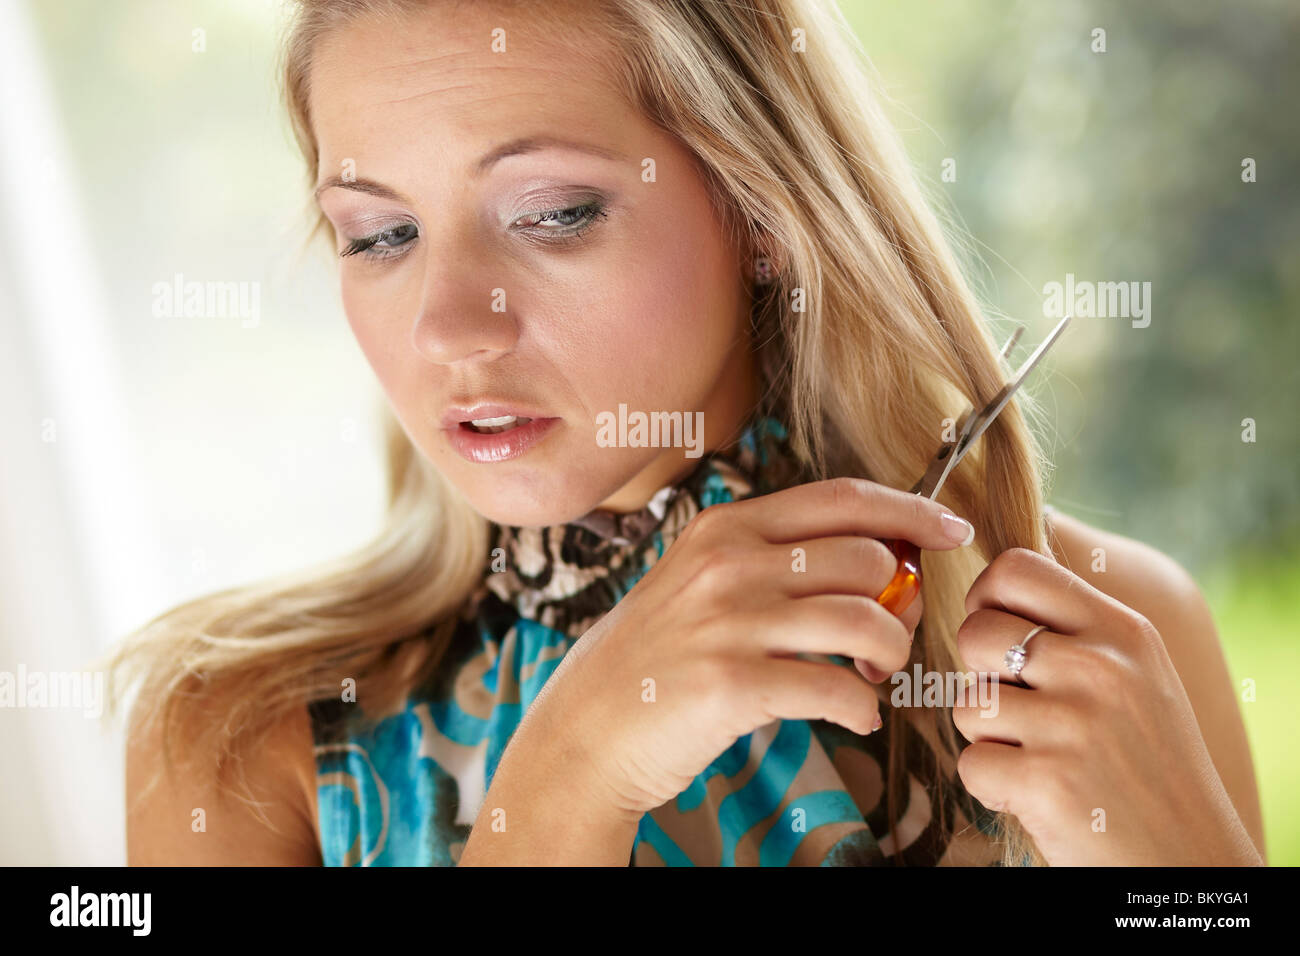 Girl cutting hair Stock Photo